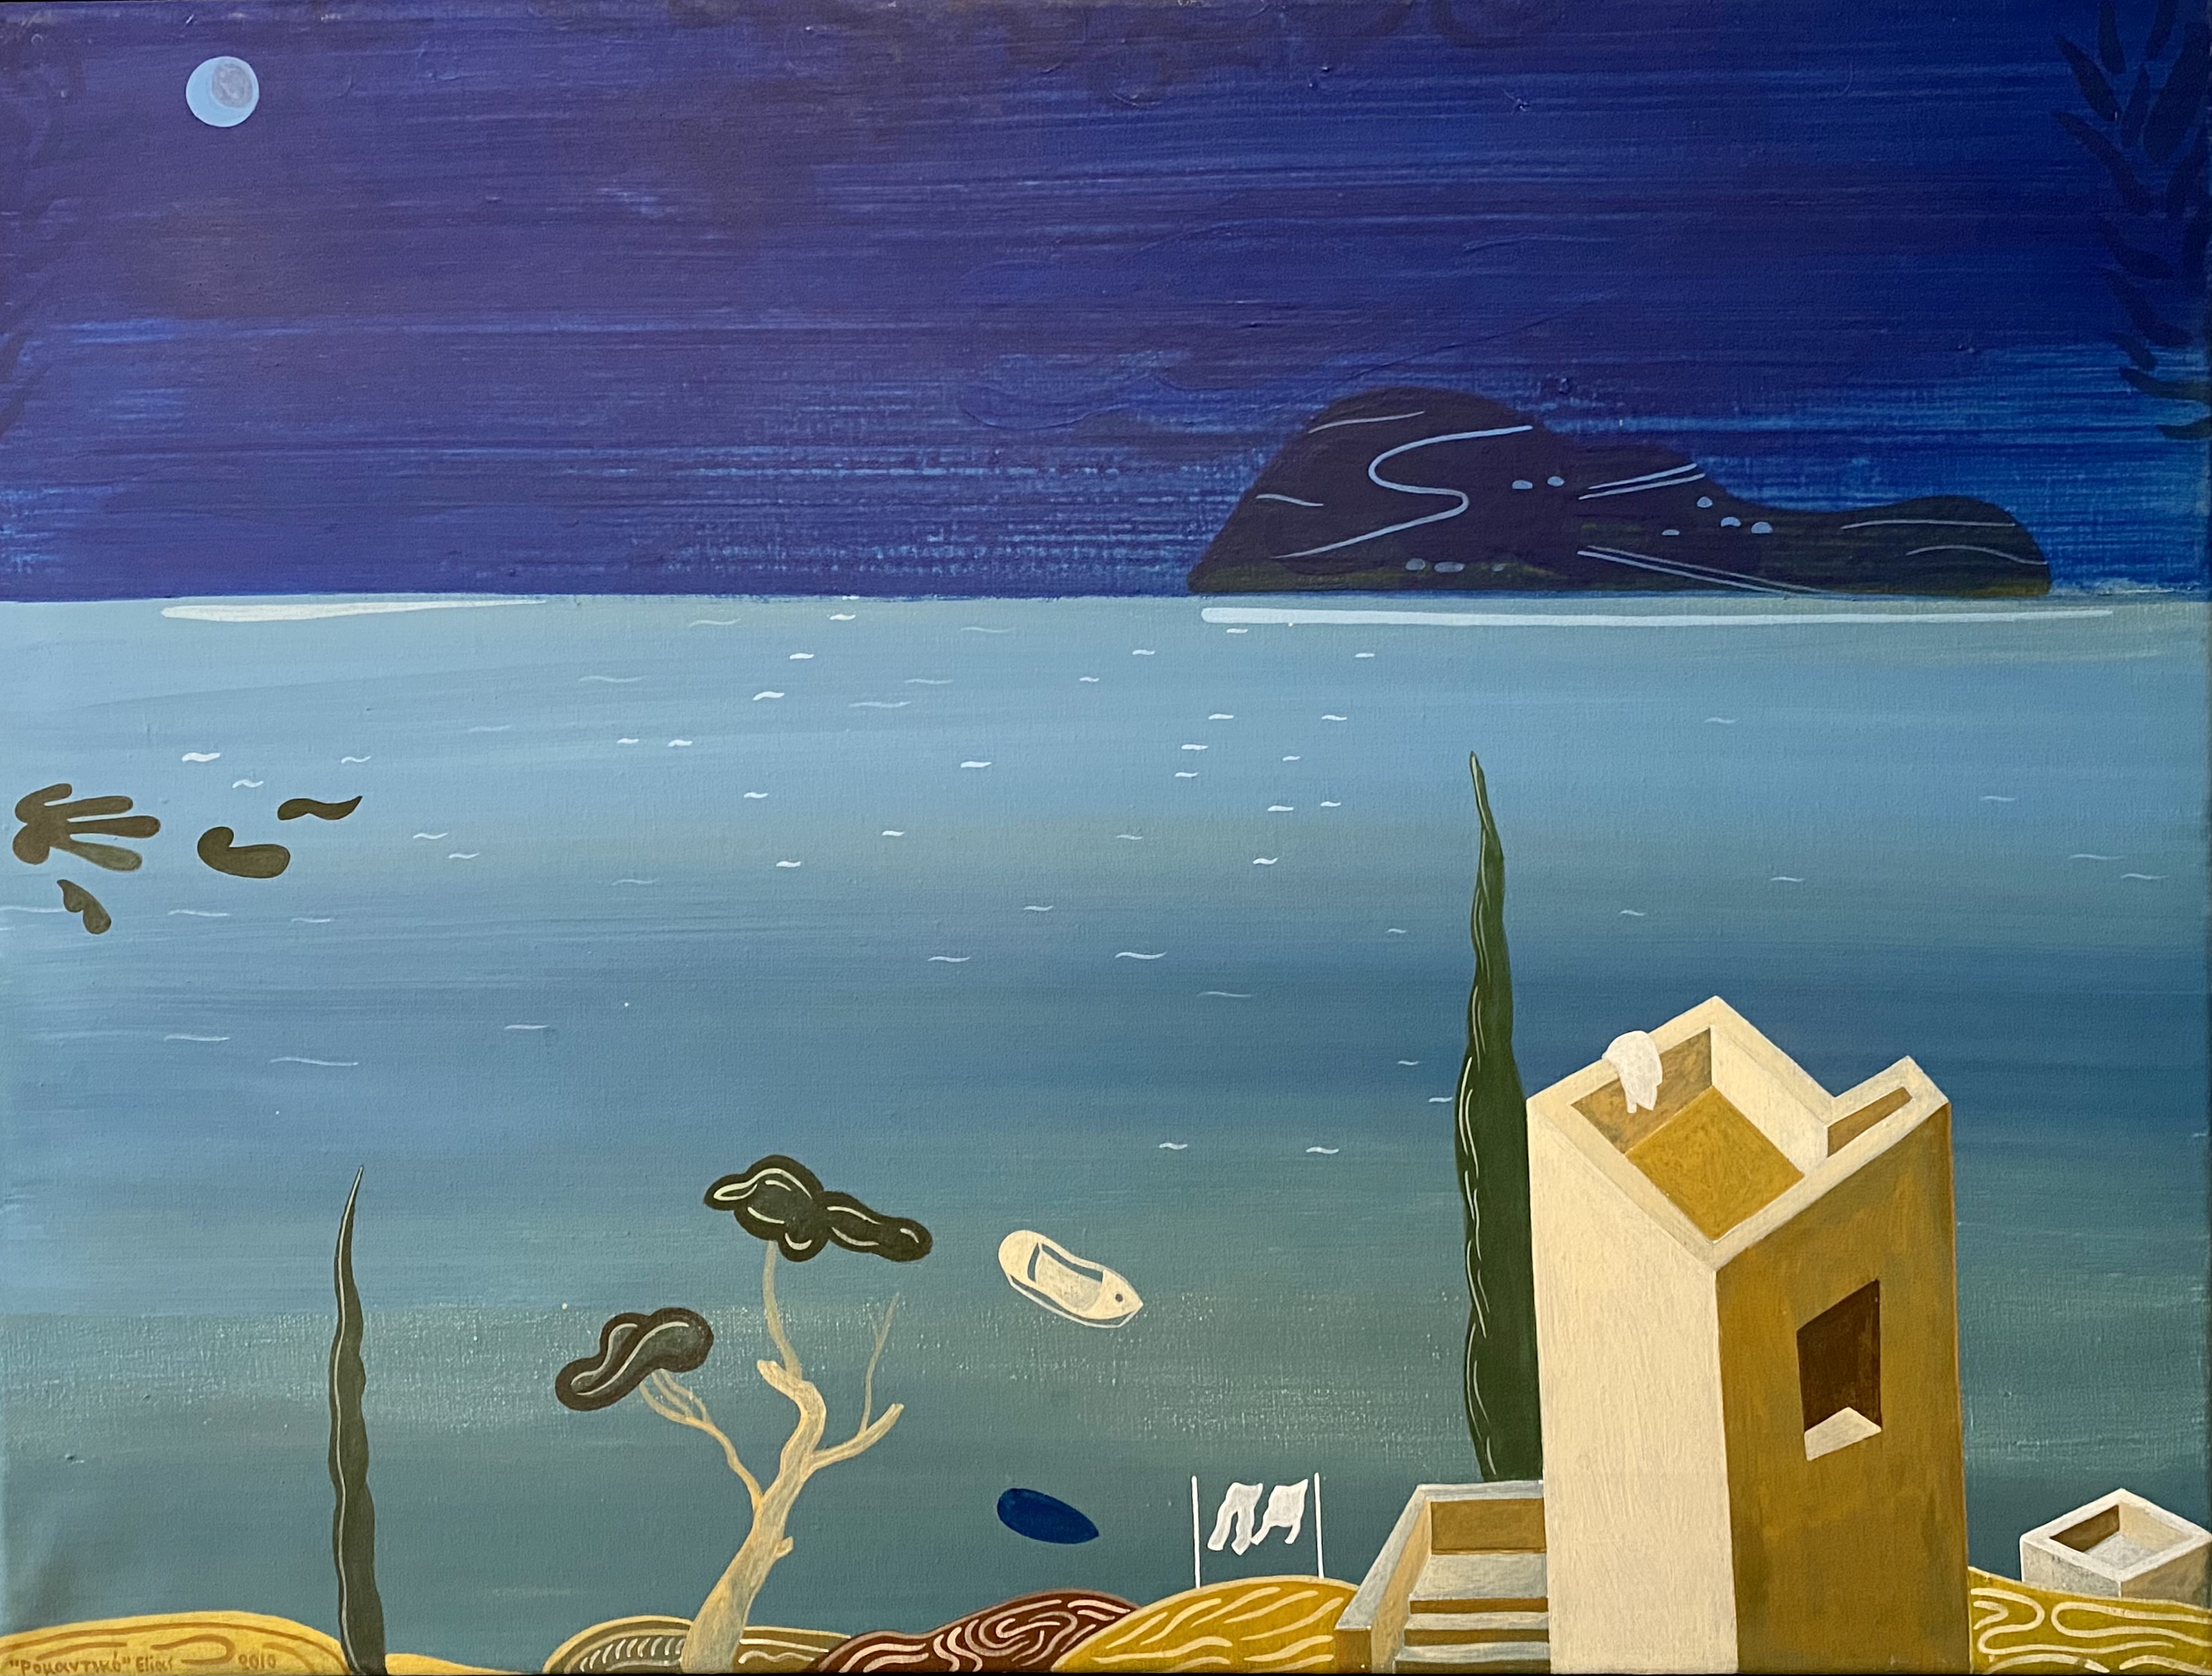 Ilias Papanikolaou (Greek, born 1974), Romantic, 2010, acrylic on canvas, 60 x 80 cm.